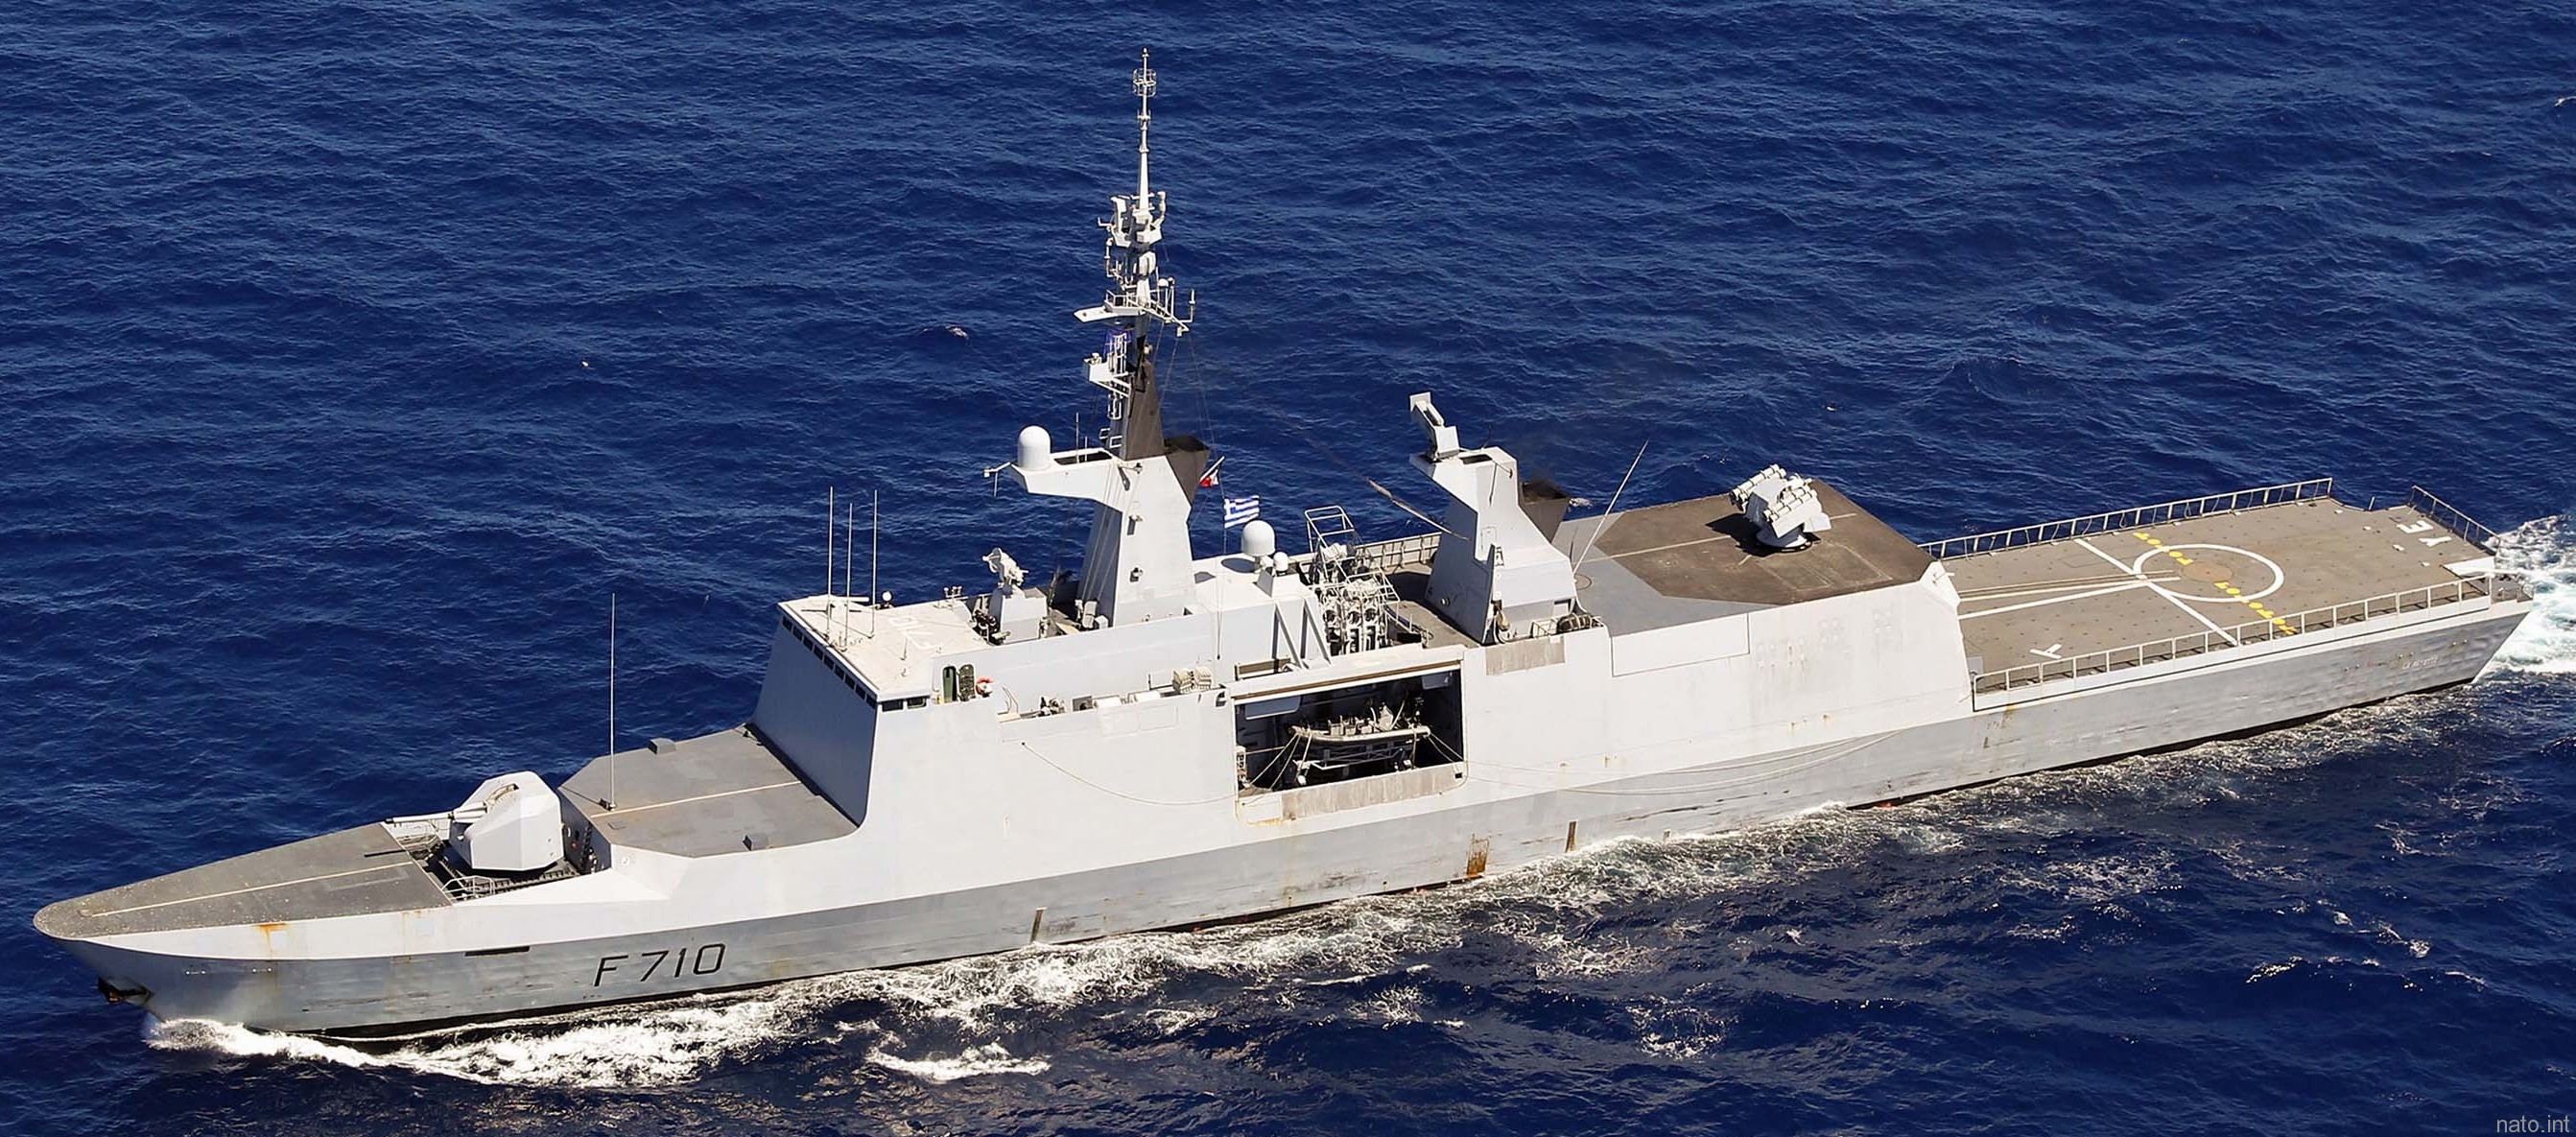 f-710 fs la fayette class frigate french navy marine nationale 09